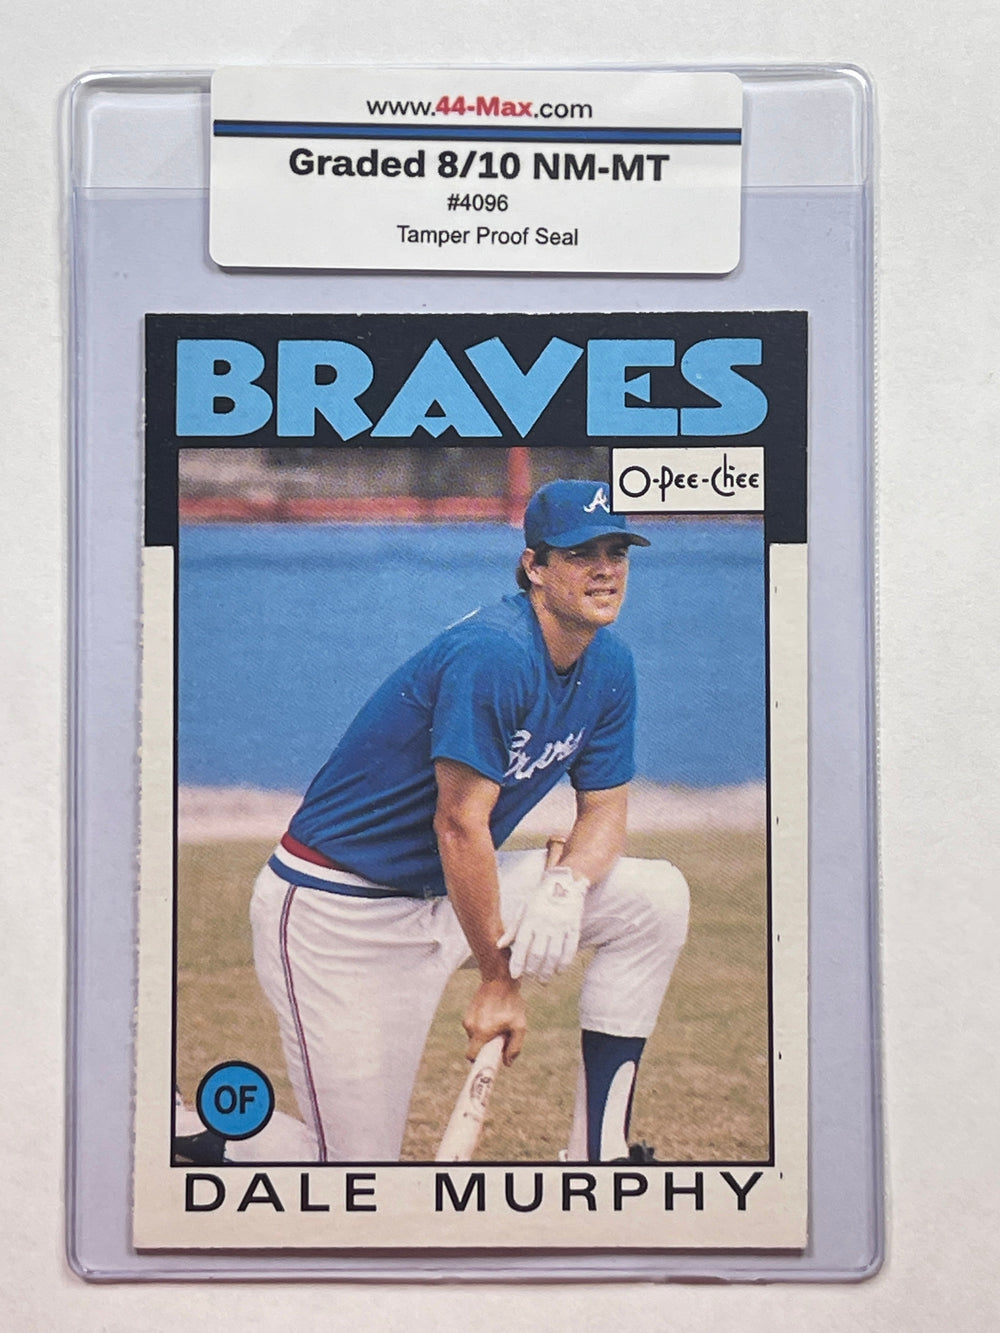 Dale Murphy 1986 O-Pee-Chee Baseball Card. 44-Max 8/10 NM-MT #4096